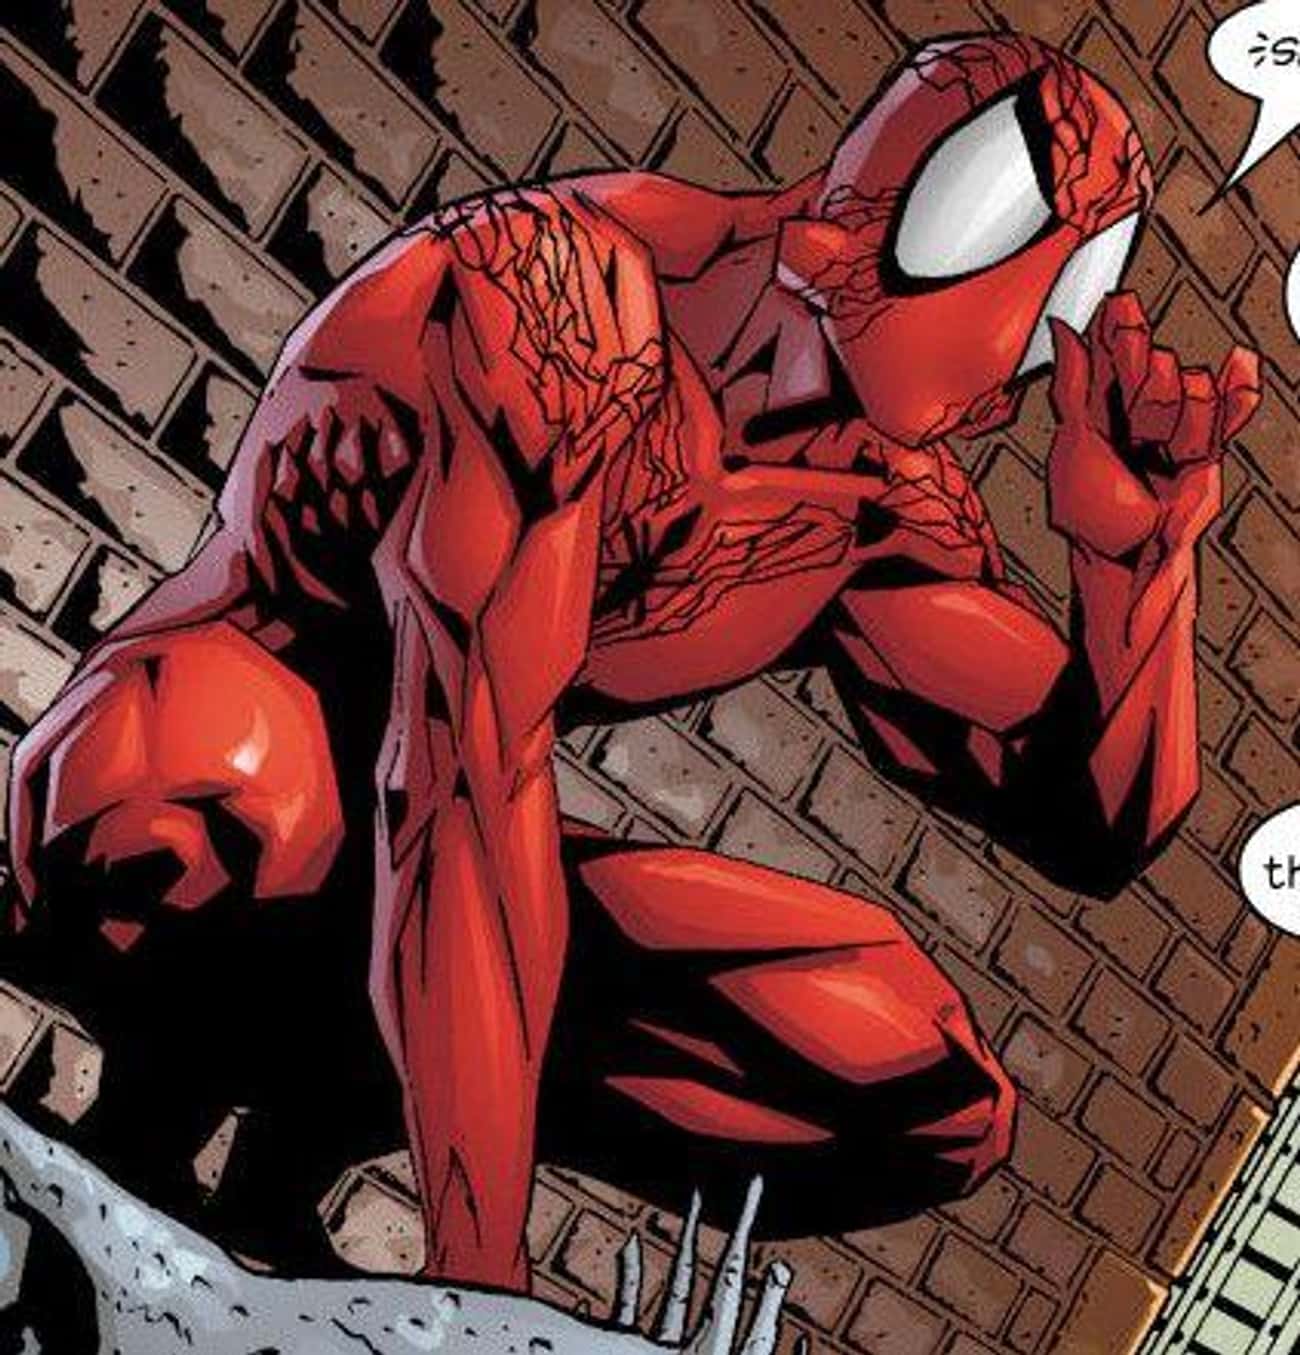 Peter Parker (AKA Spider)